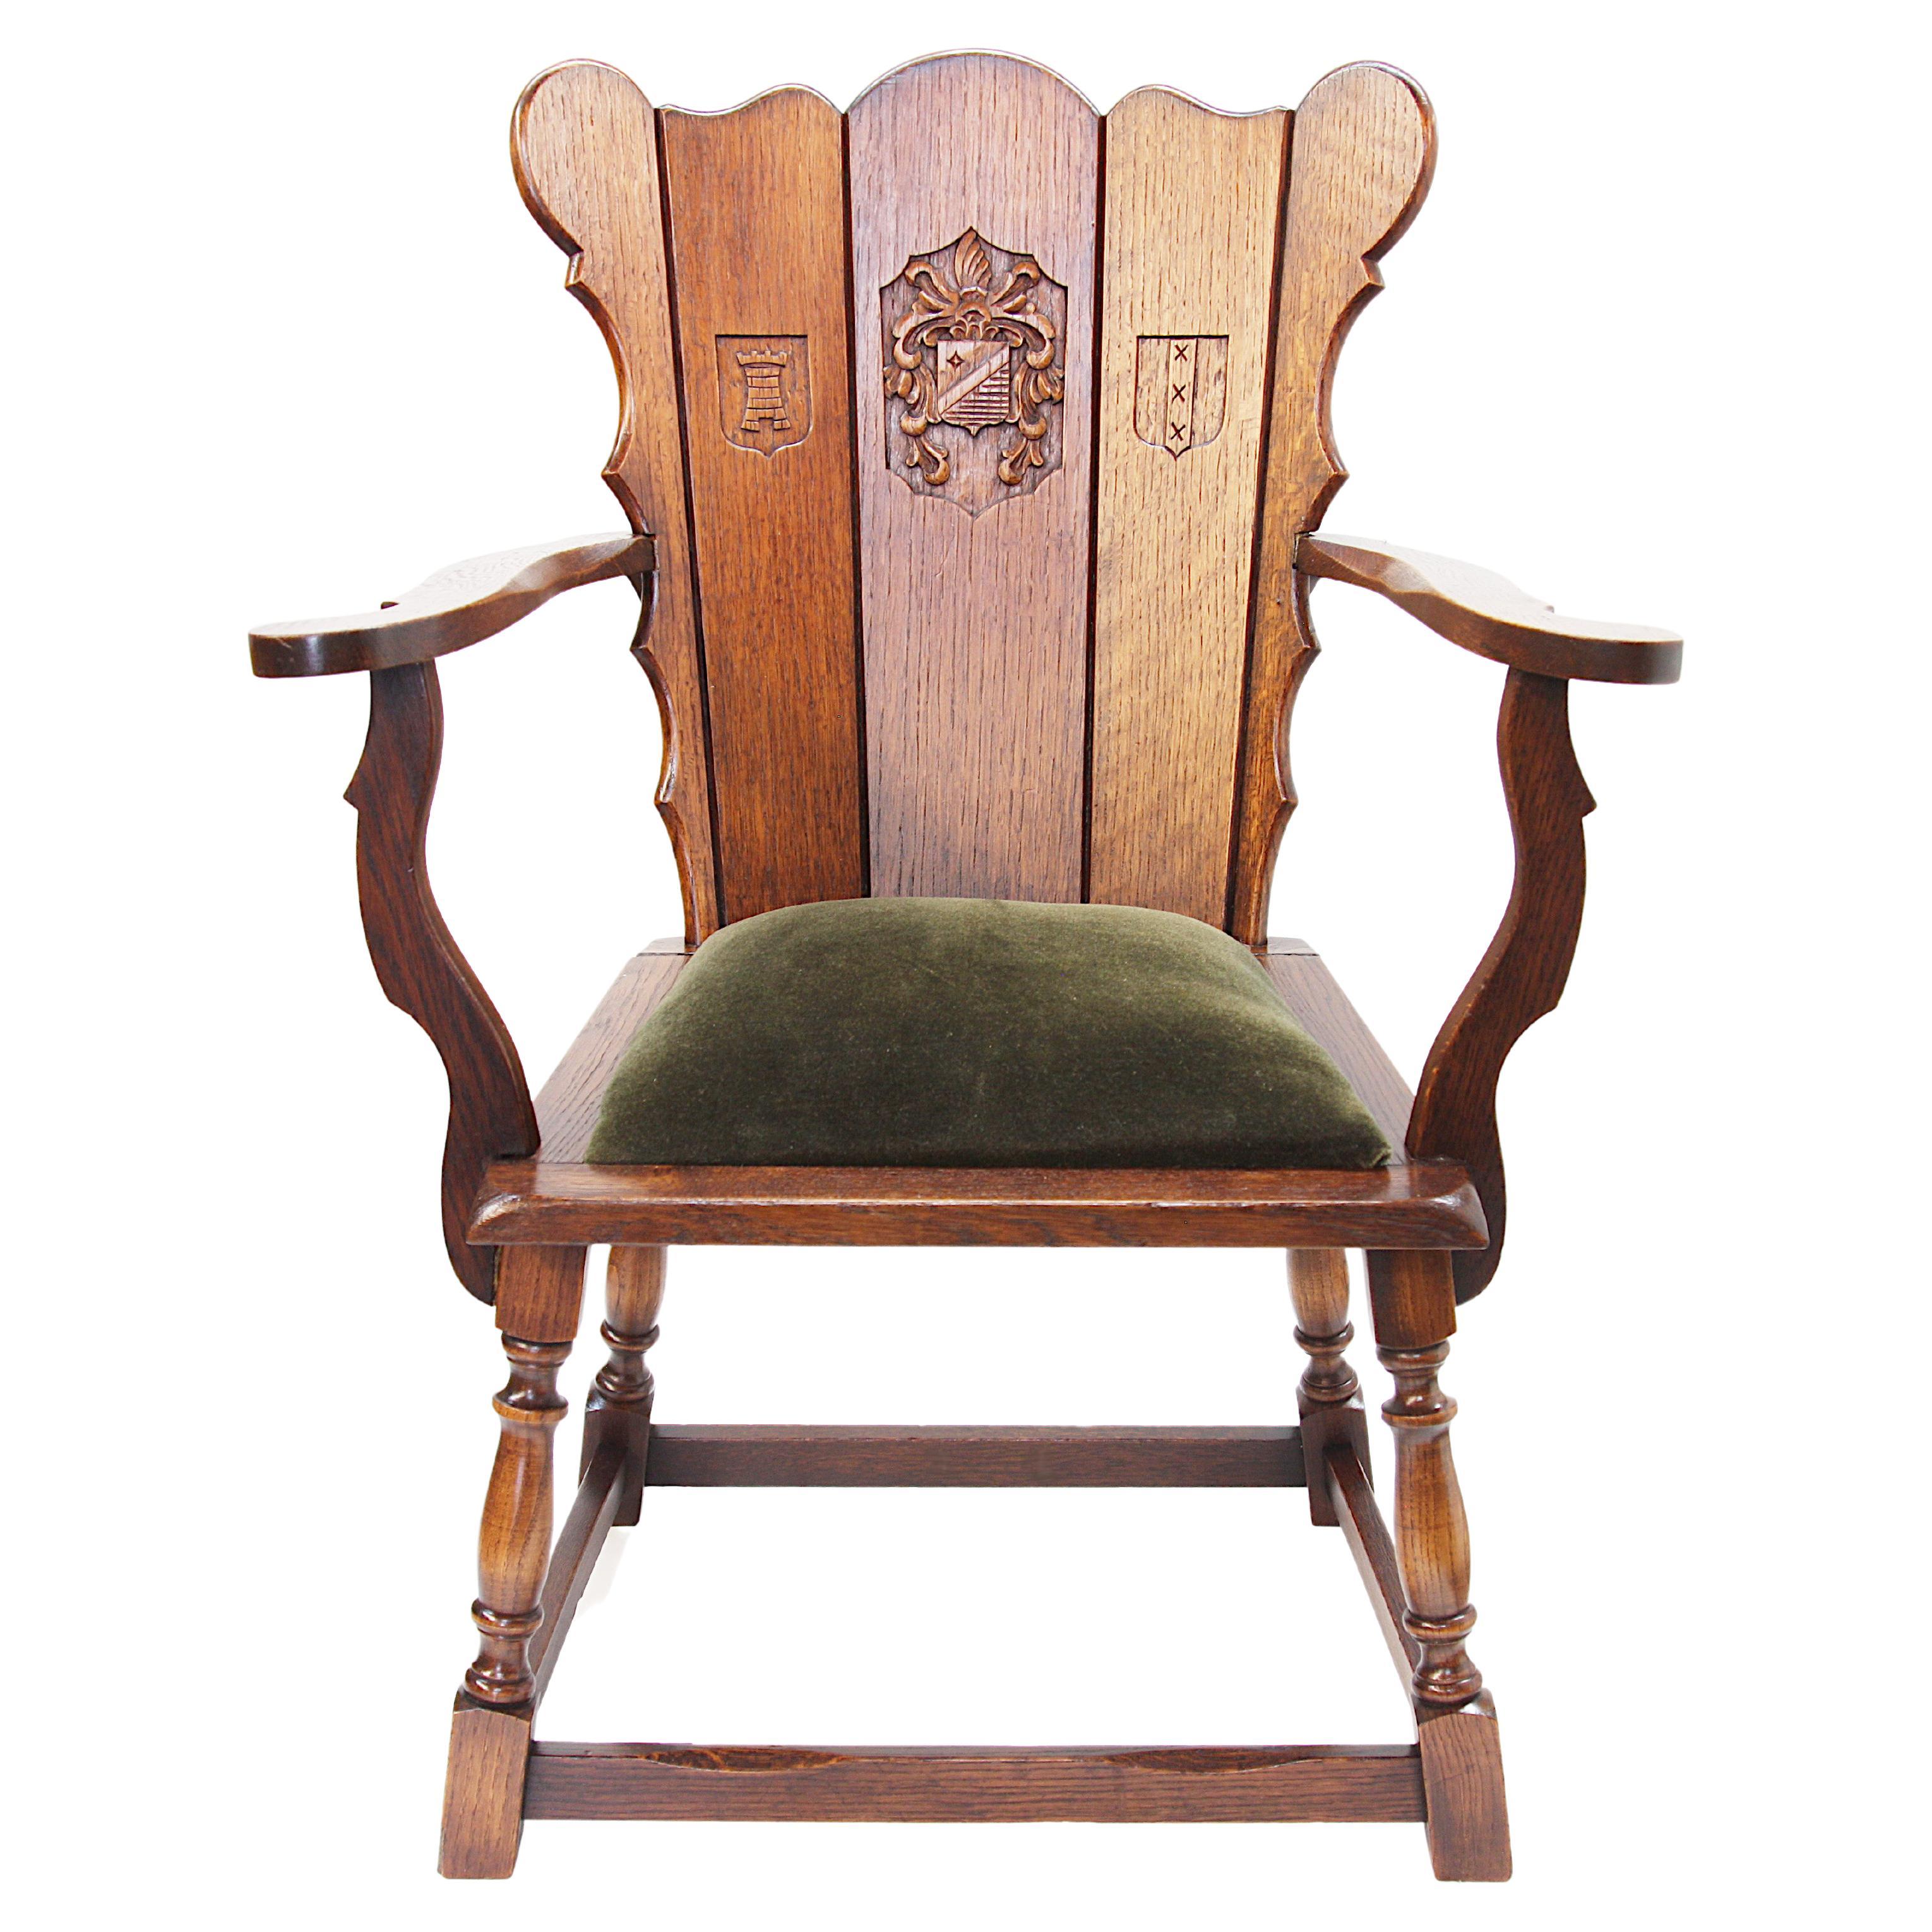 Vintage Dutch Medieval Revival Heraldic Coat of Arms Oak Lodge Arm Chair